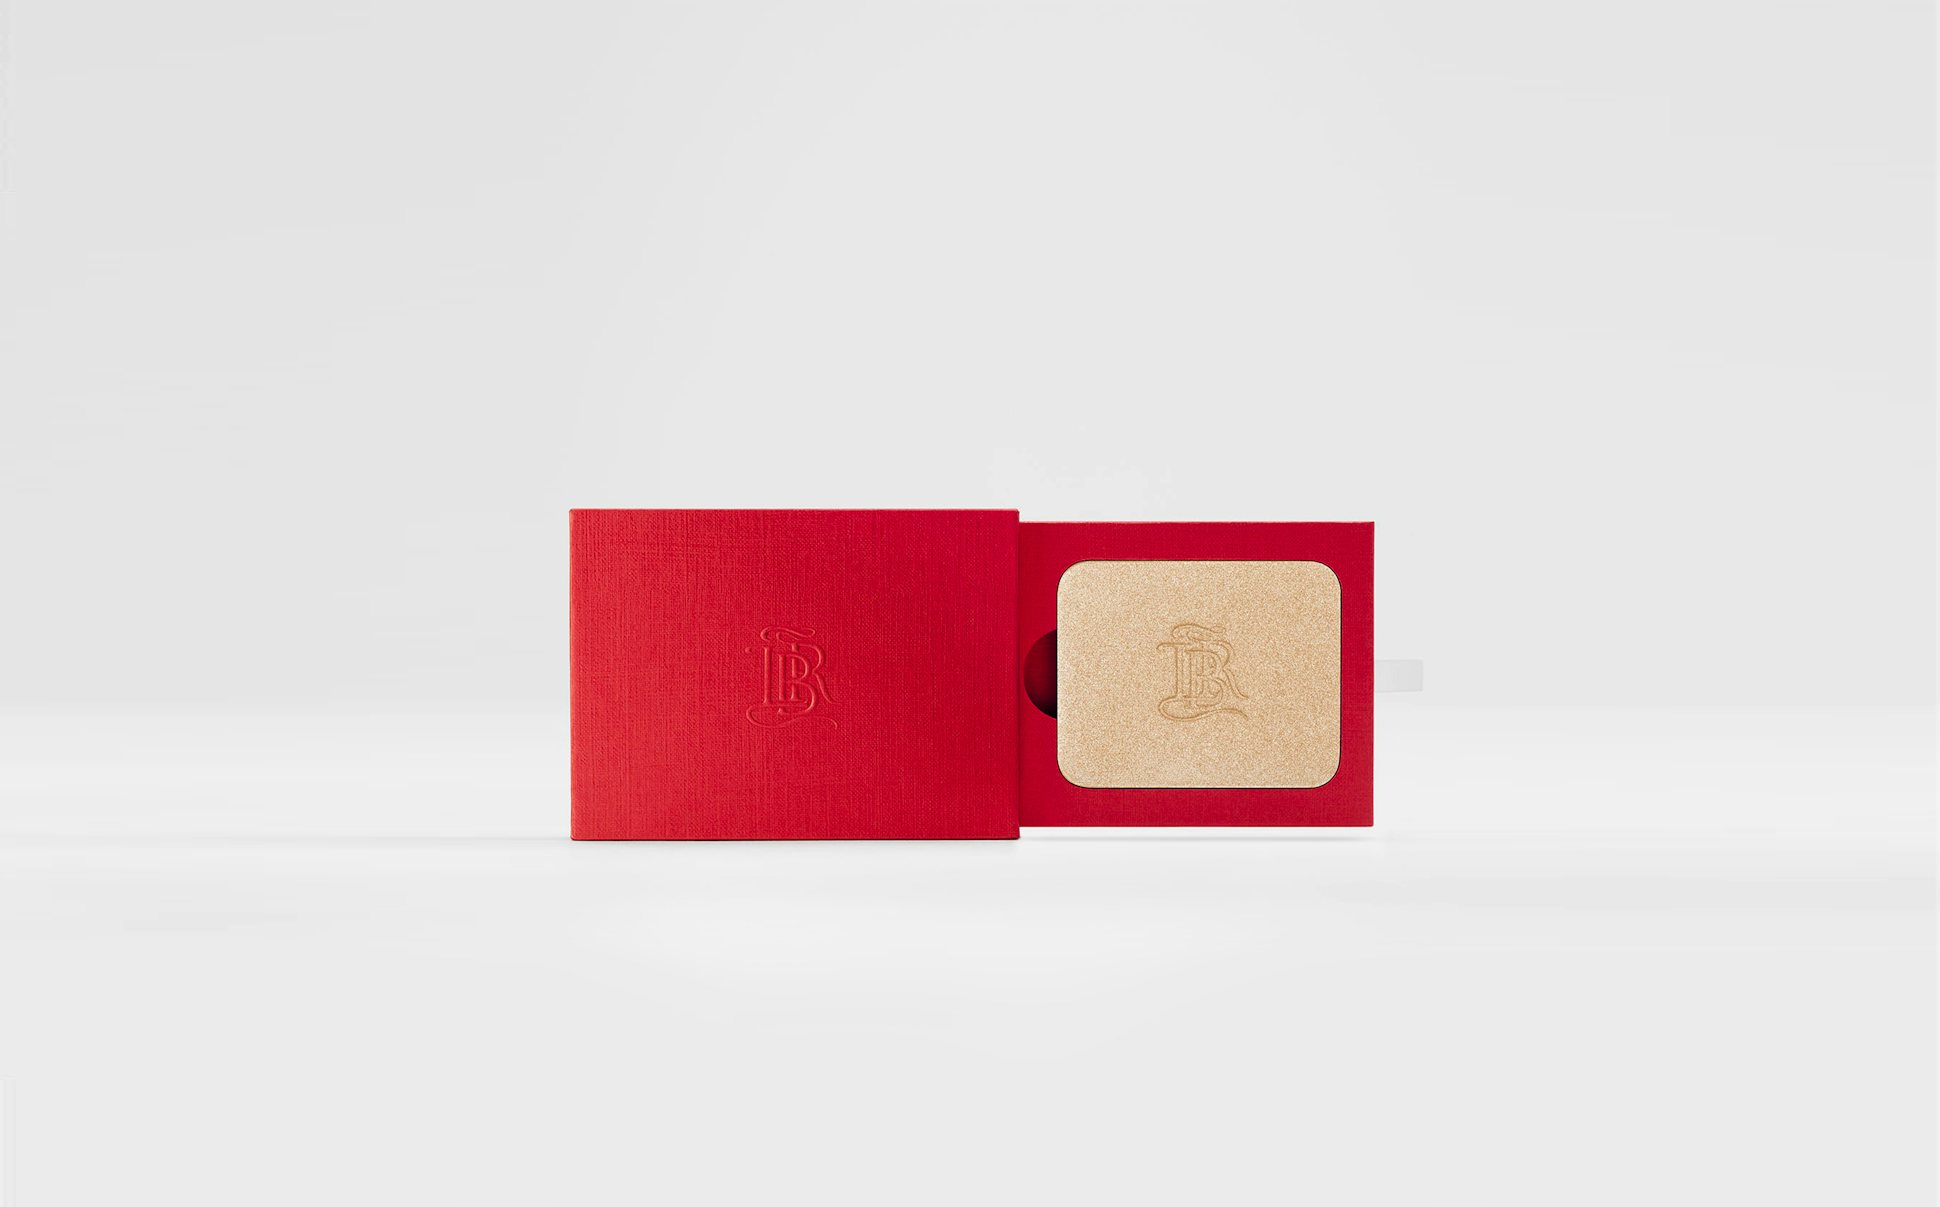 La bouche rouge La Lumière highlighter in the red paper case